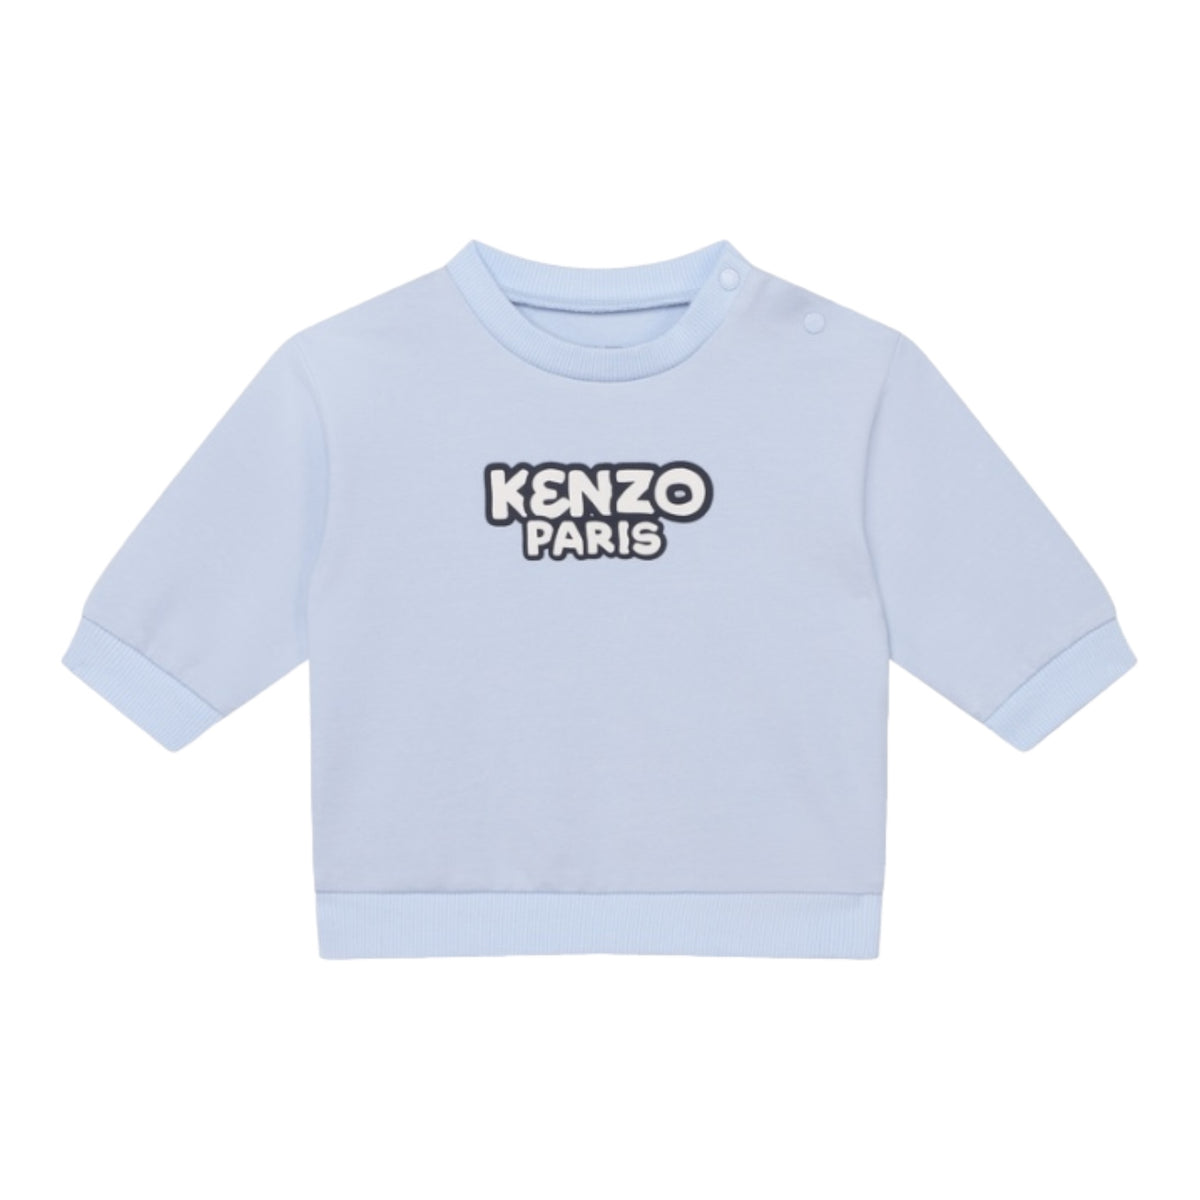 Kenzo Kids Toddler's 2pc Cotton Sweatsuit